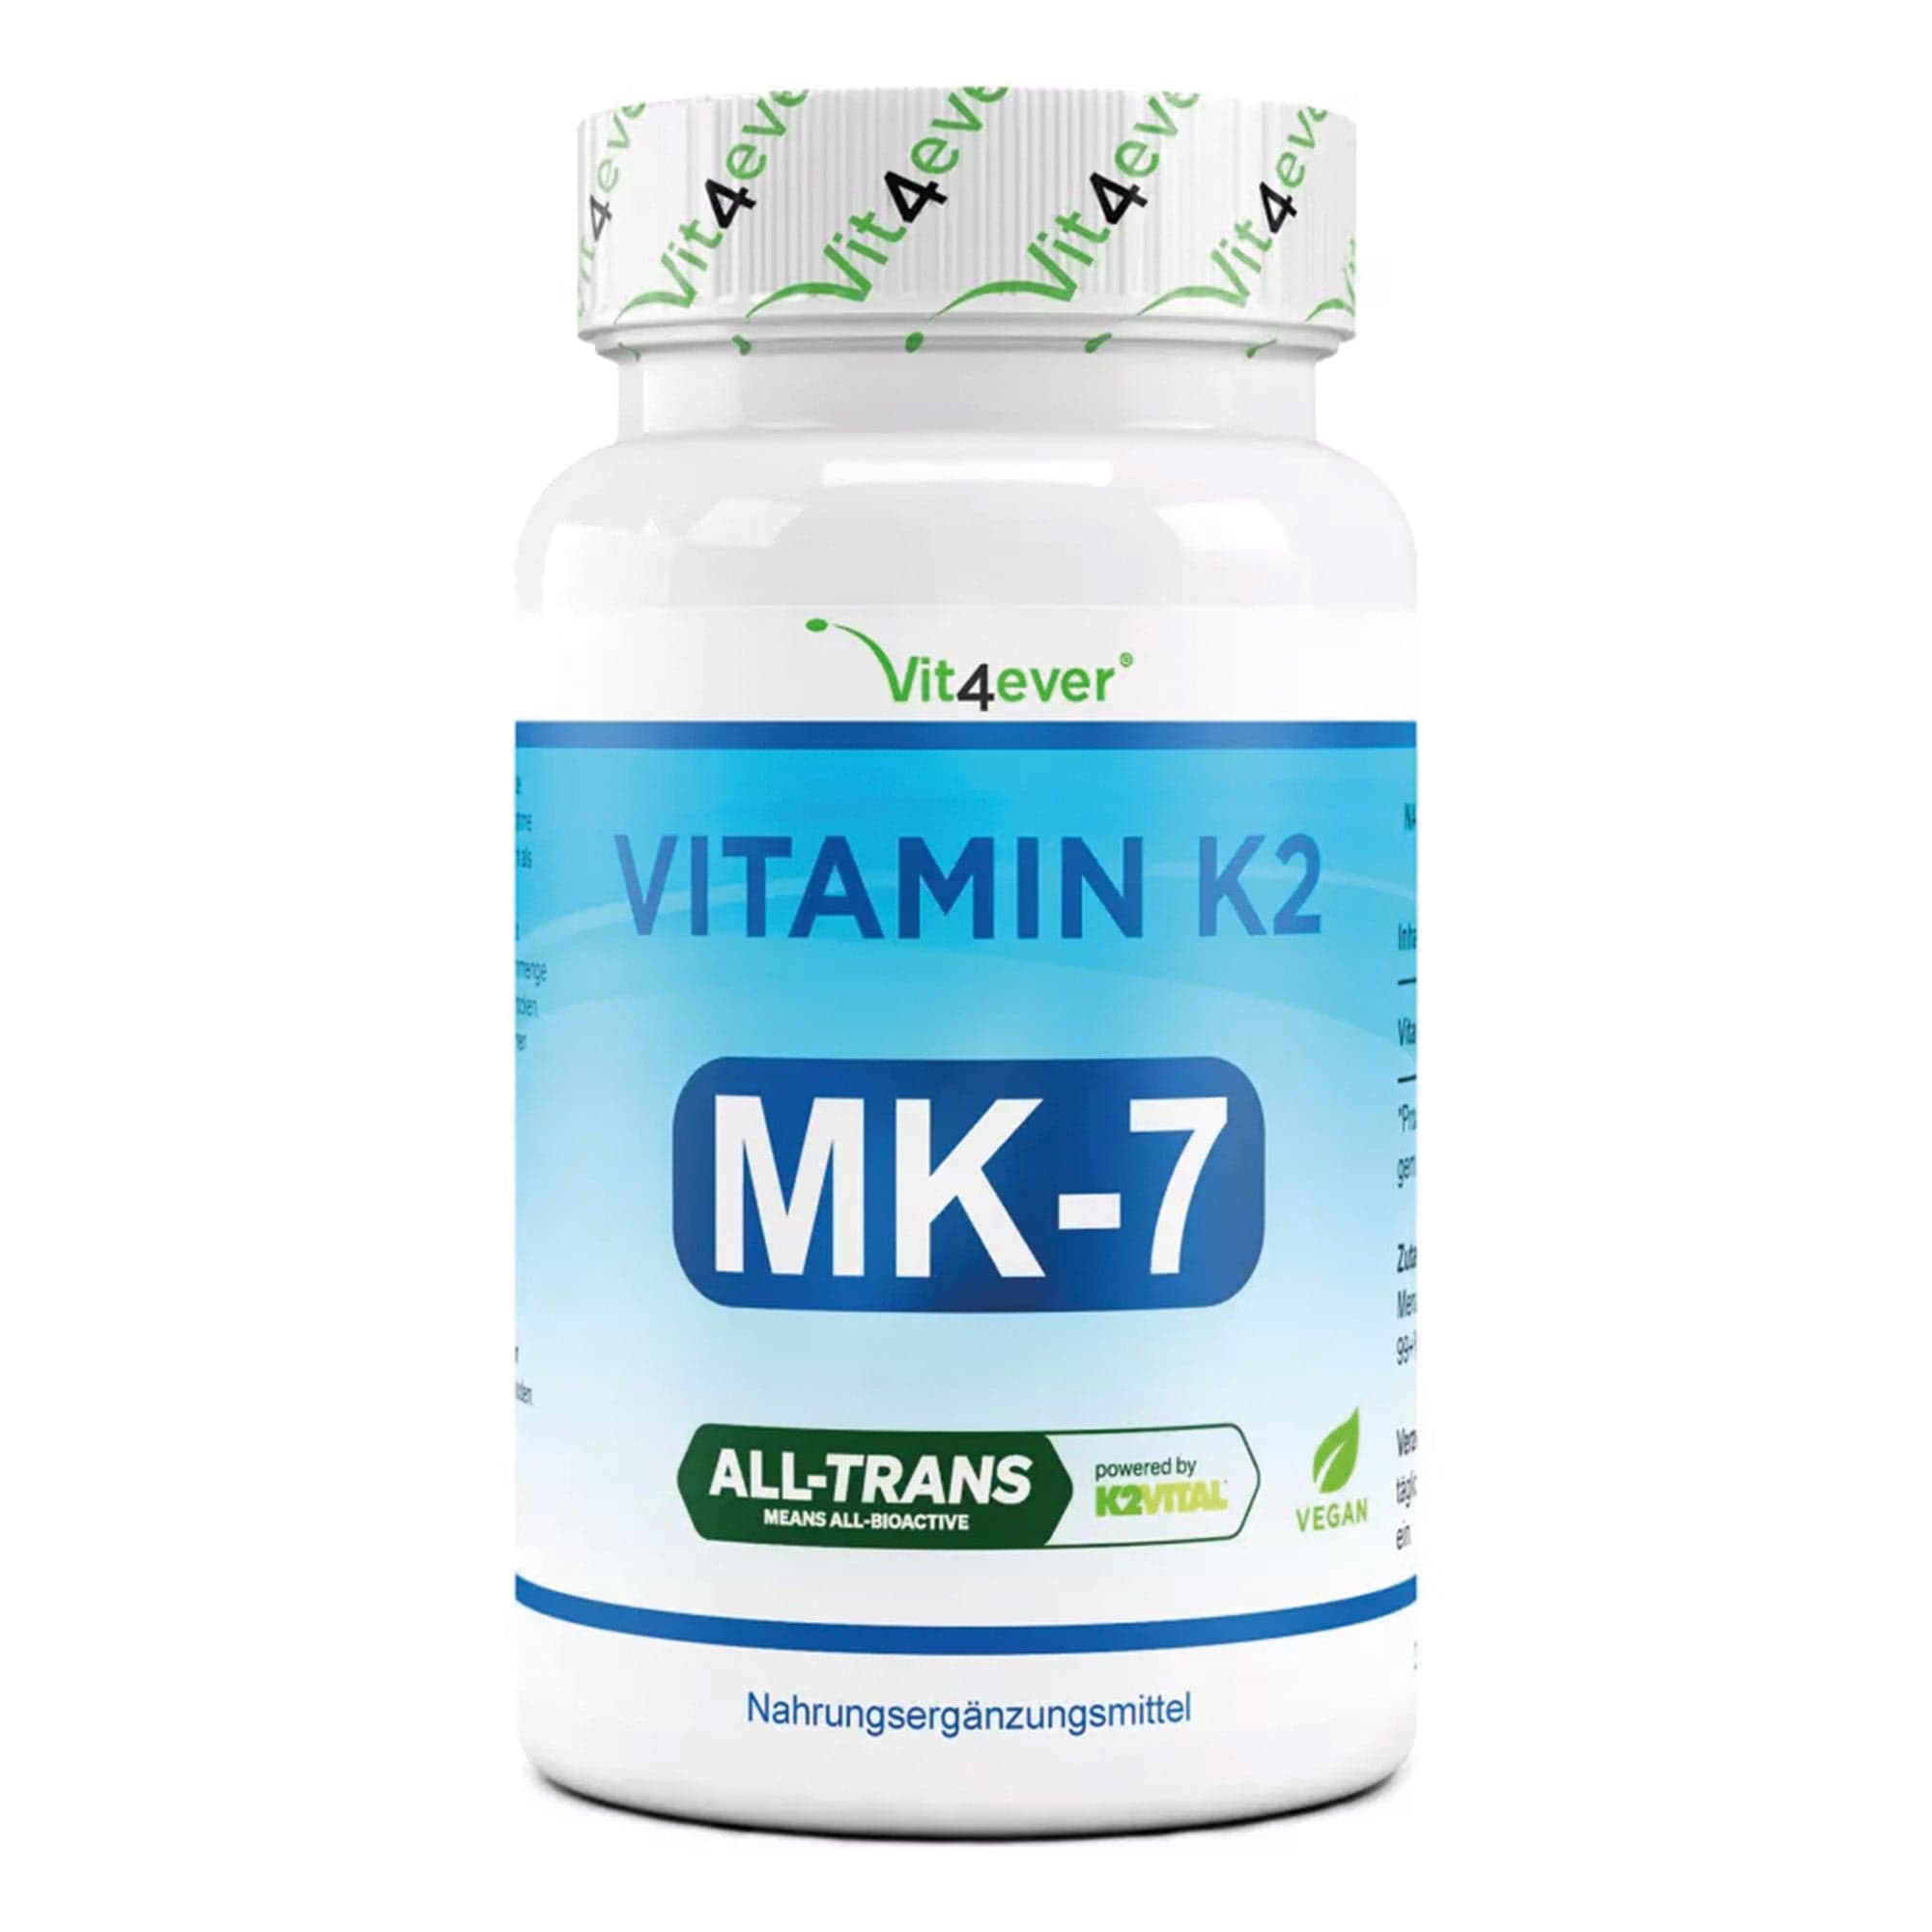 Vitamine K2 | MK-7 | 99,7+% All Trans MK7 K2VITAL® by Kappa | Vegan | 365 tabletten | Vit4ever